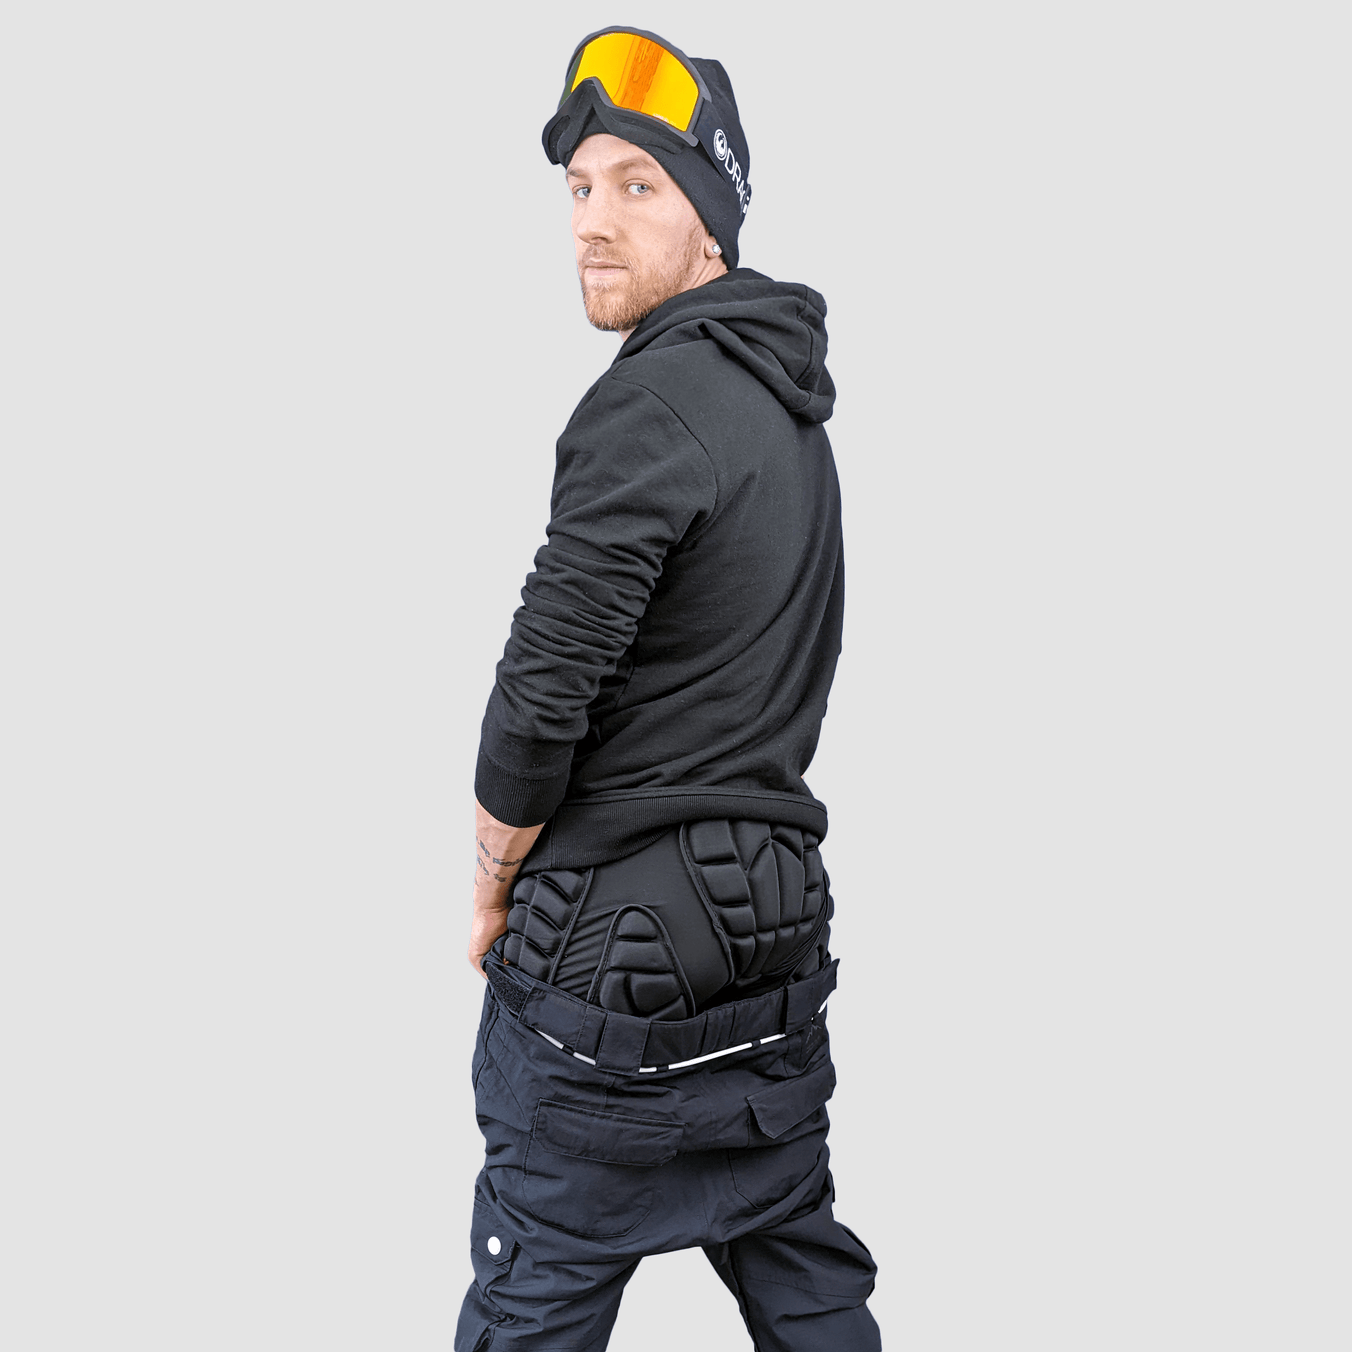 Angled shot of Snowboarder wearing impact shorts